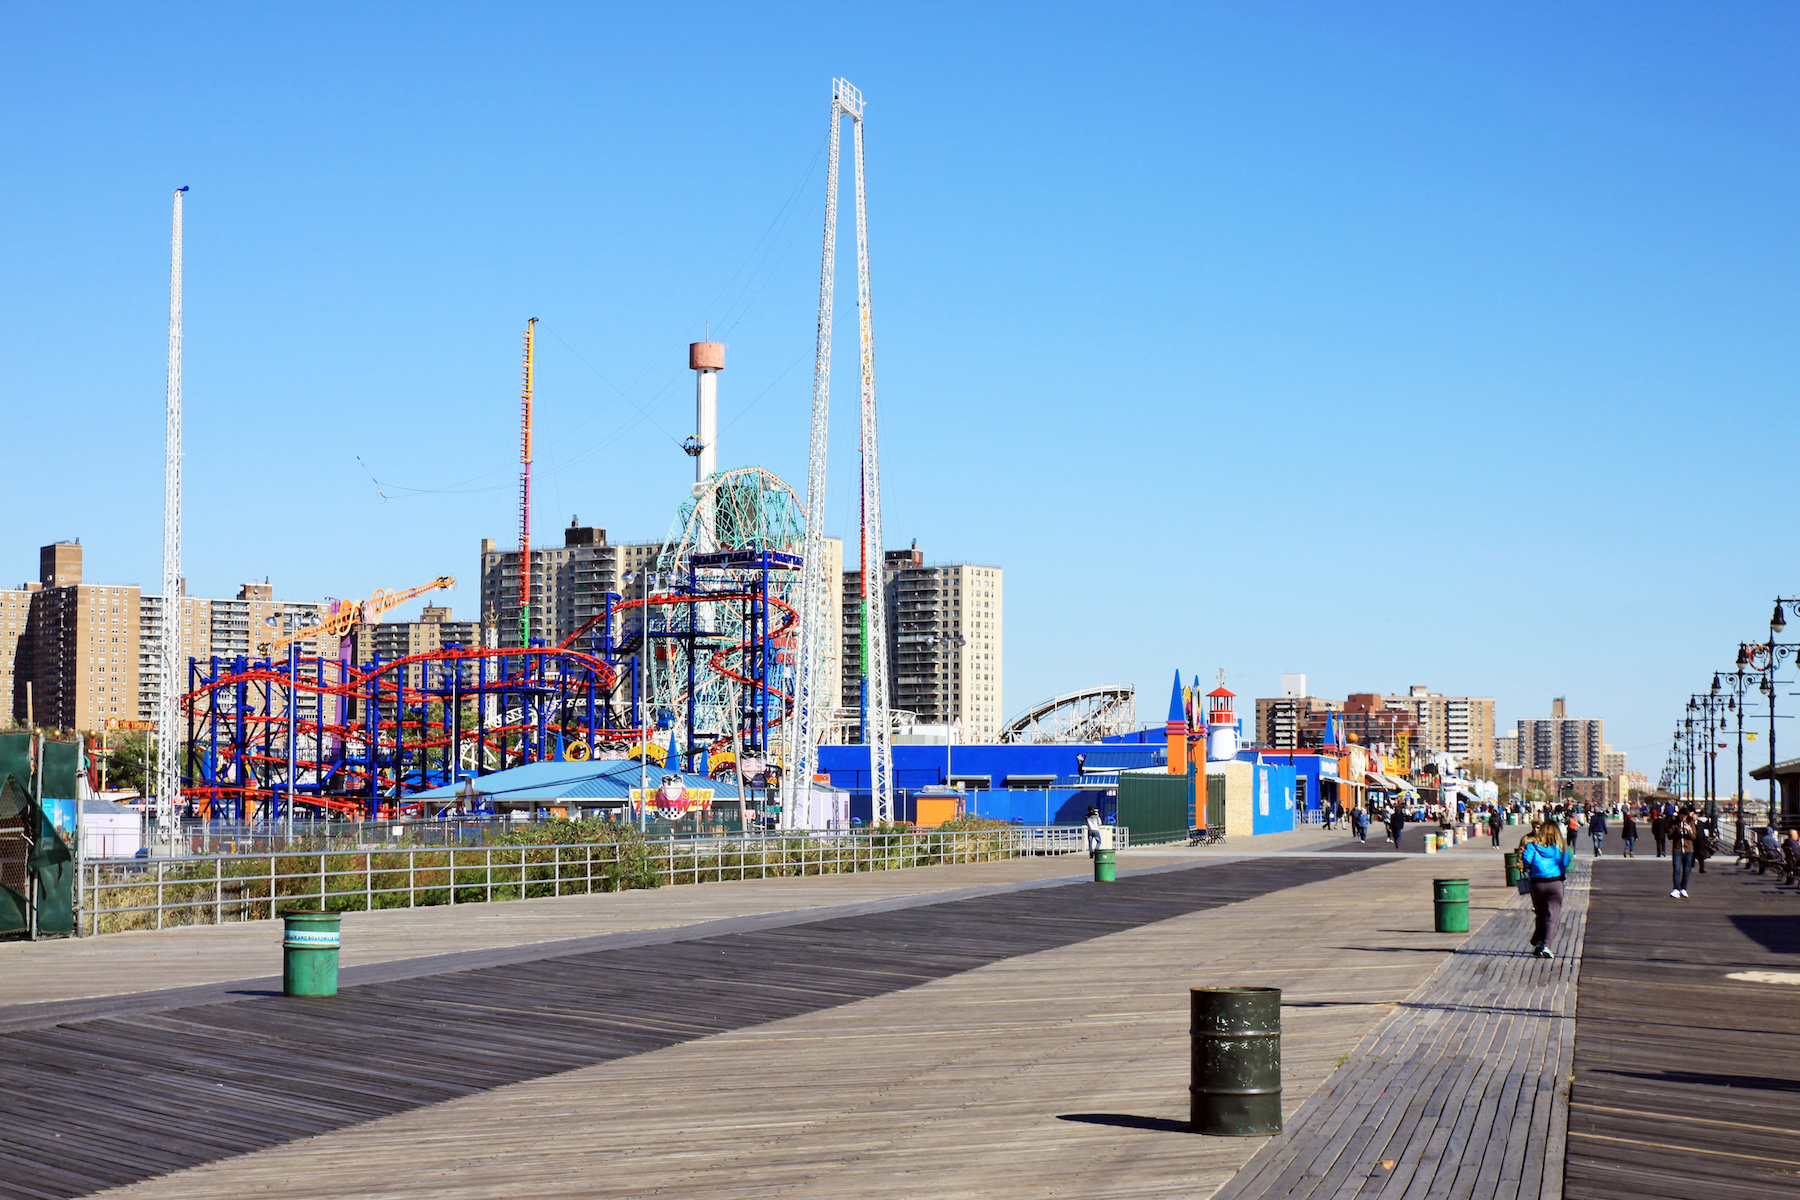 Coney Island Image